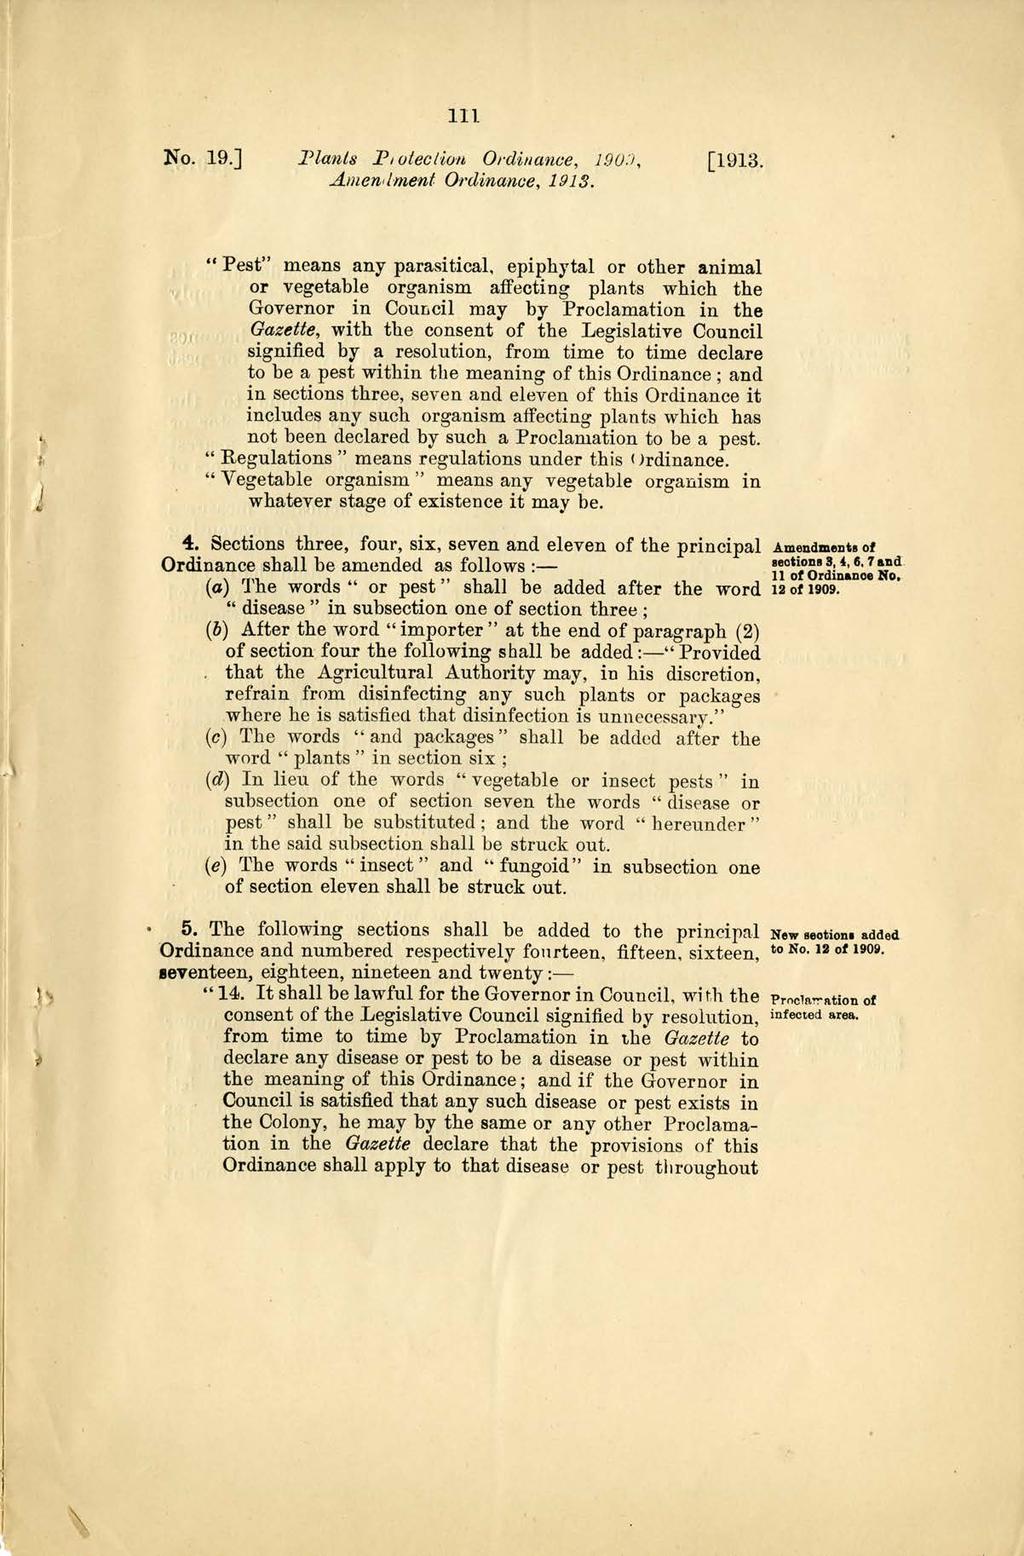 No. 19.] 1II 1'lants P oleclion Ordinance, 190.'), Amen iment Ordinance, 1913.